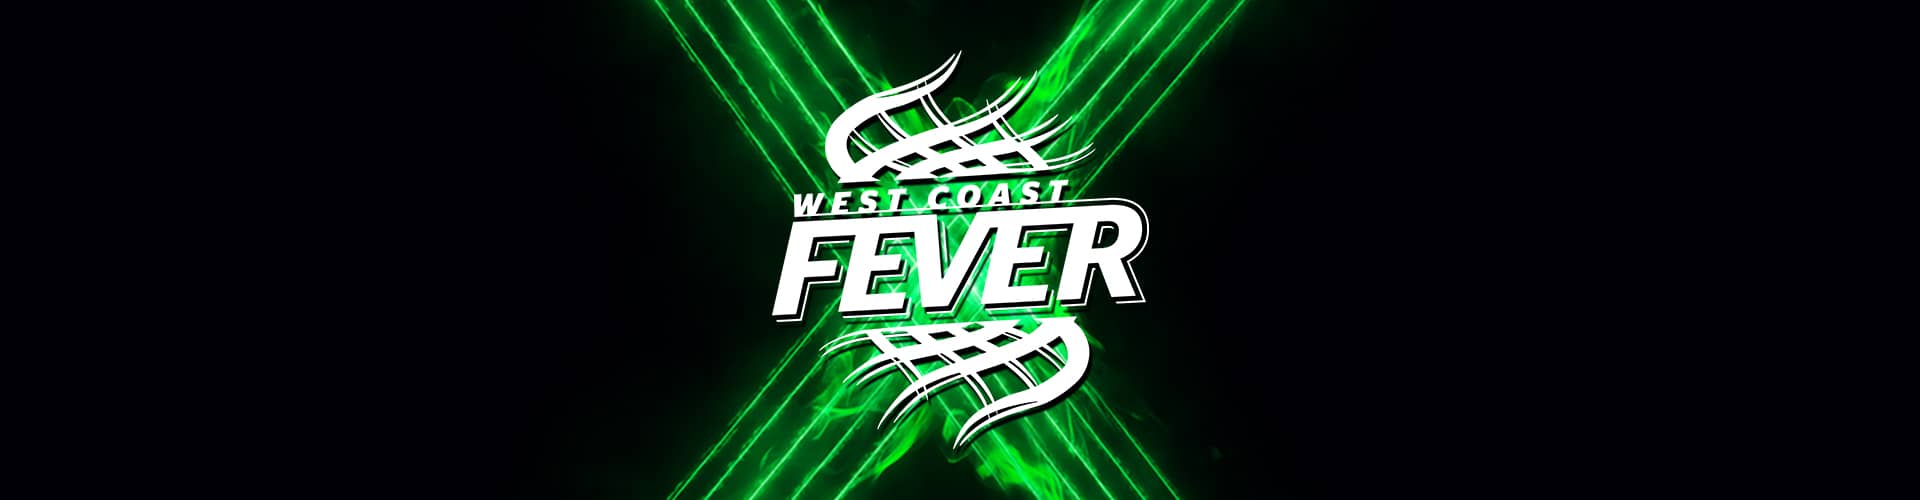 west coast fever header